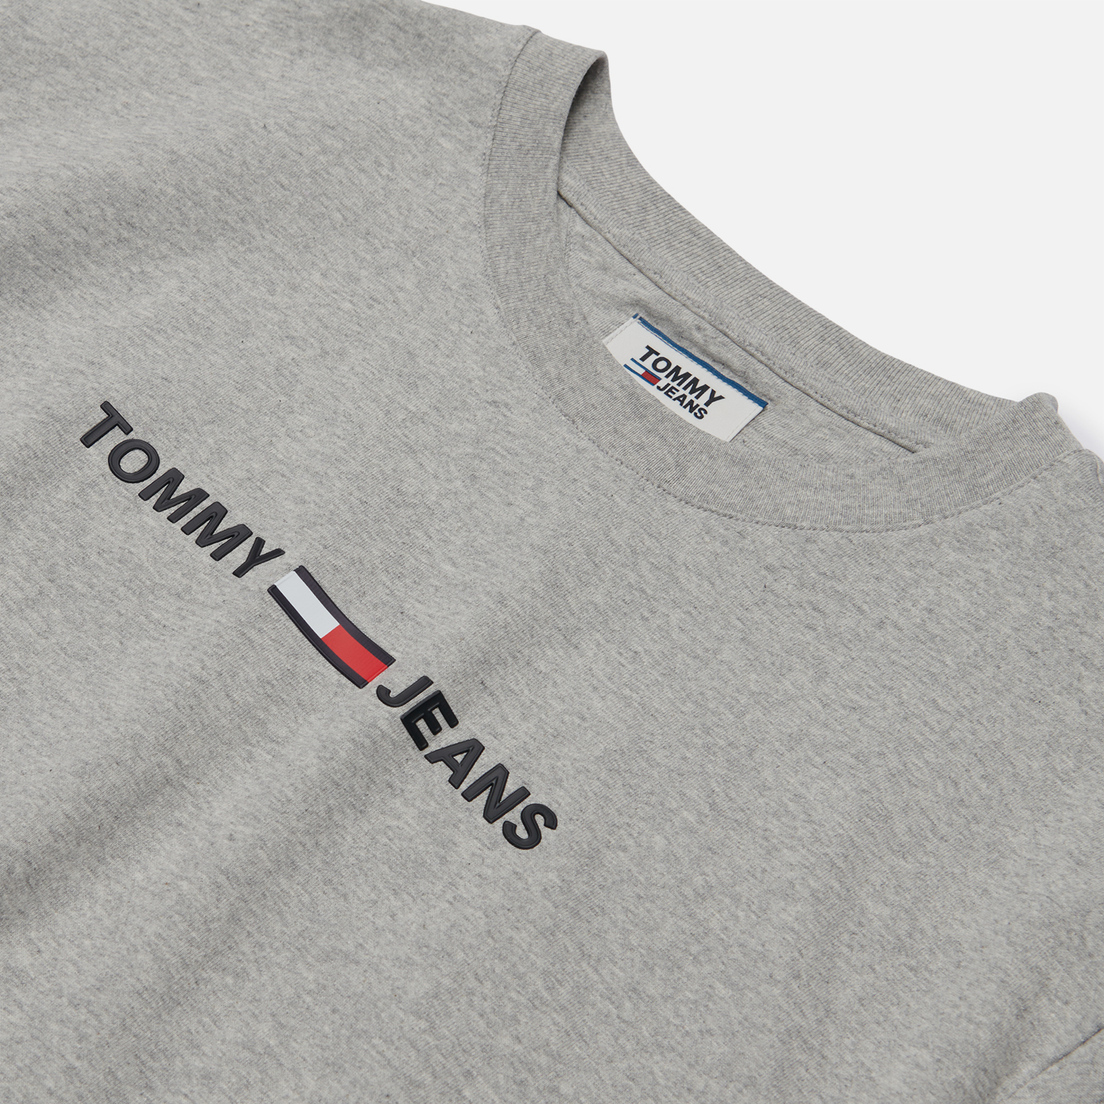 Tommy Jeans Мужская футболка Straight Small Logo Regular Fit